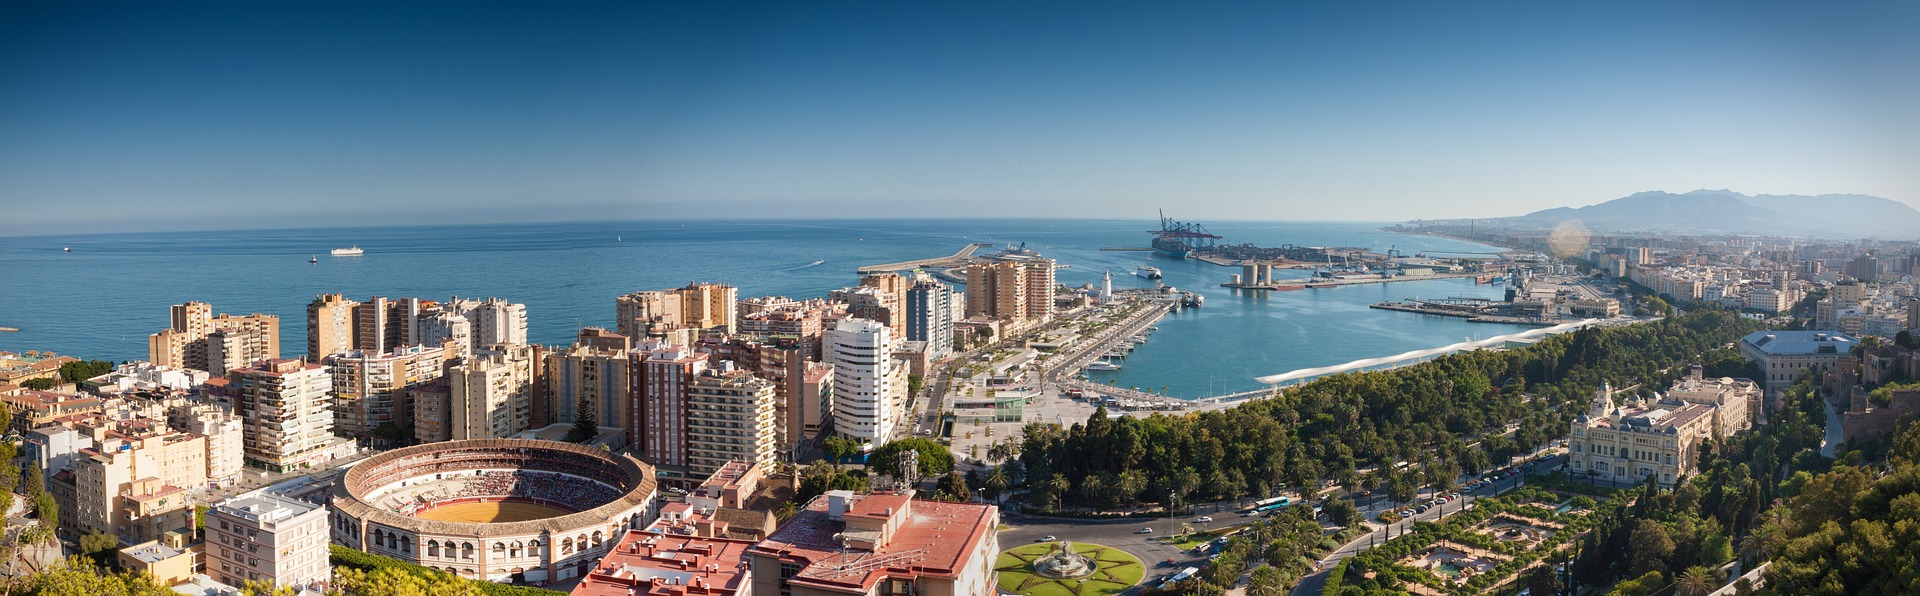 Malaga - Spain